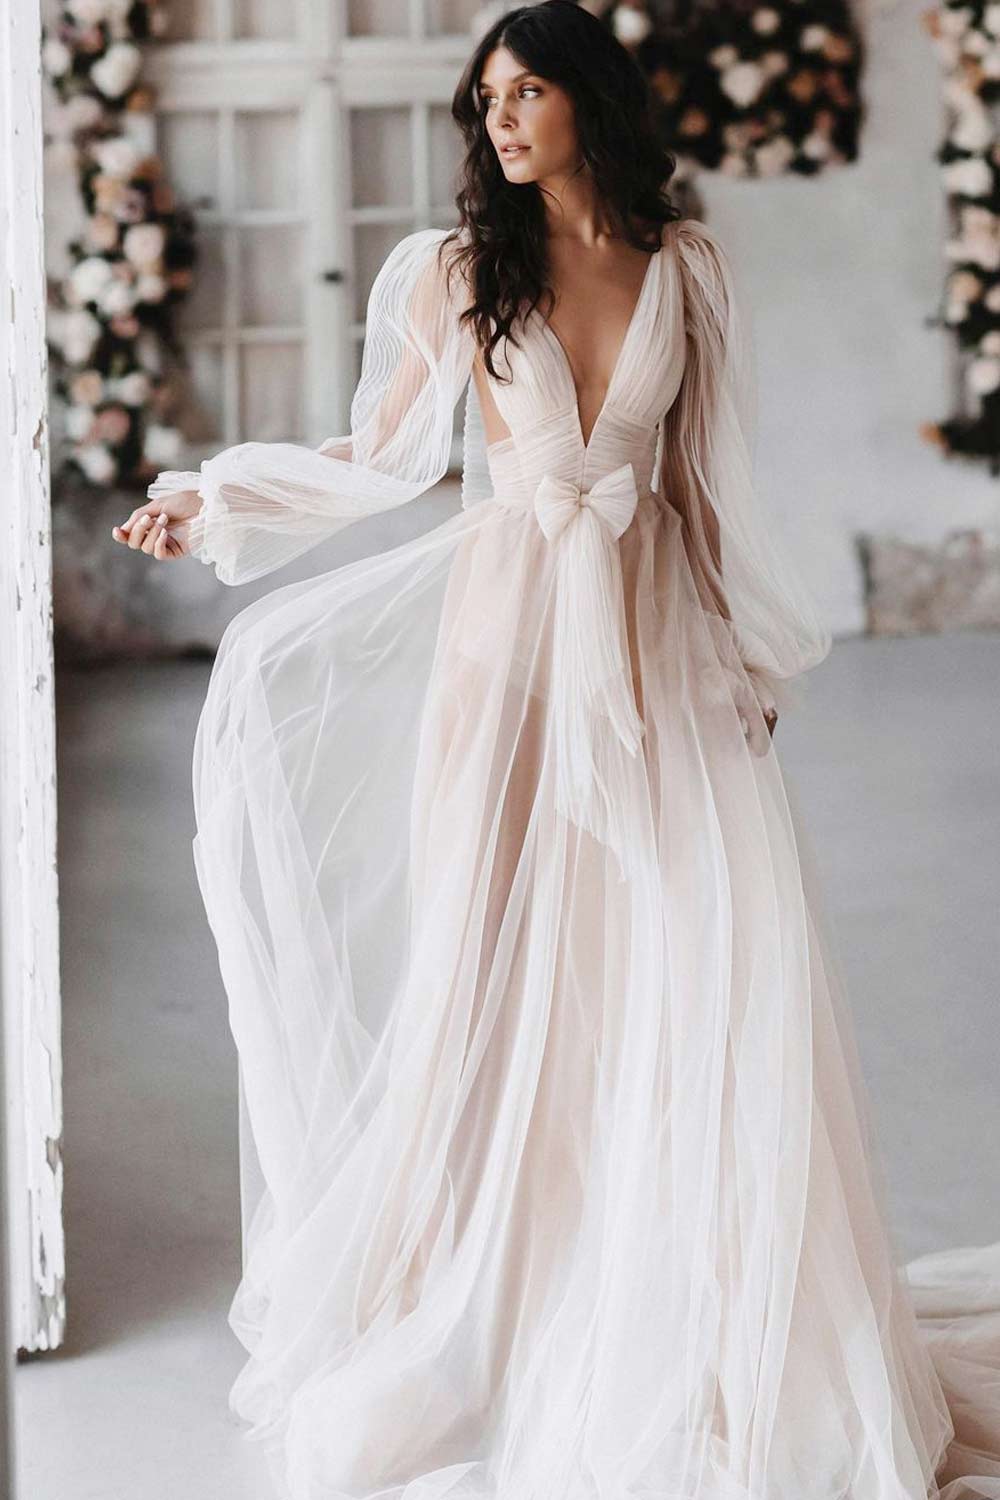 Long Sleeve Wedding Dress with a Bow